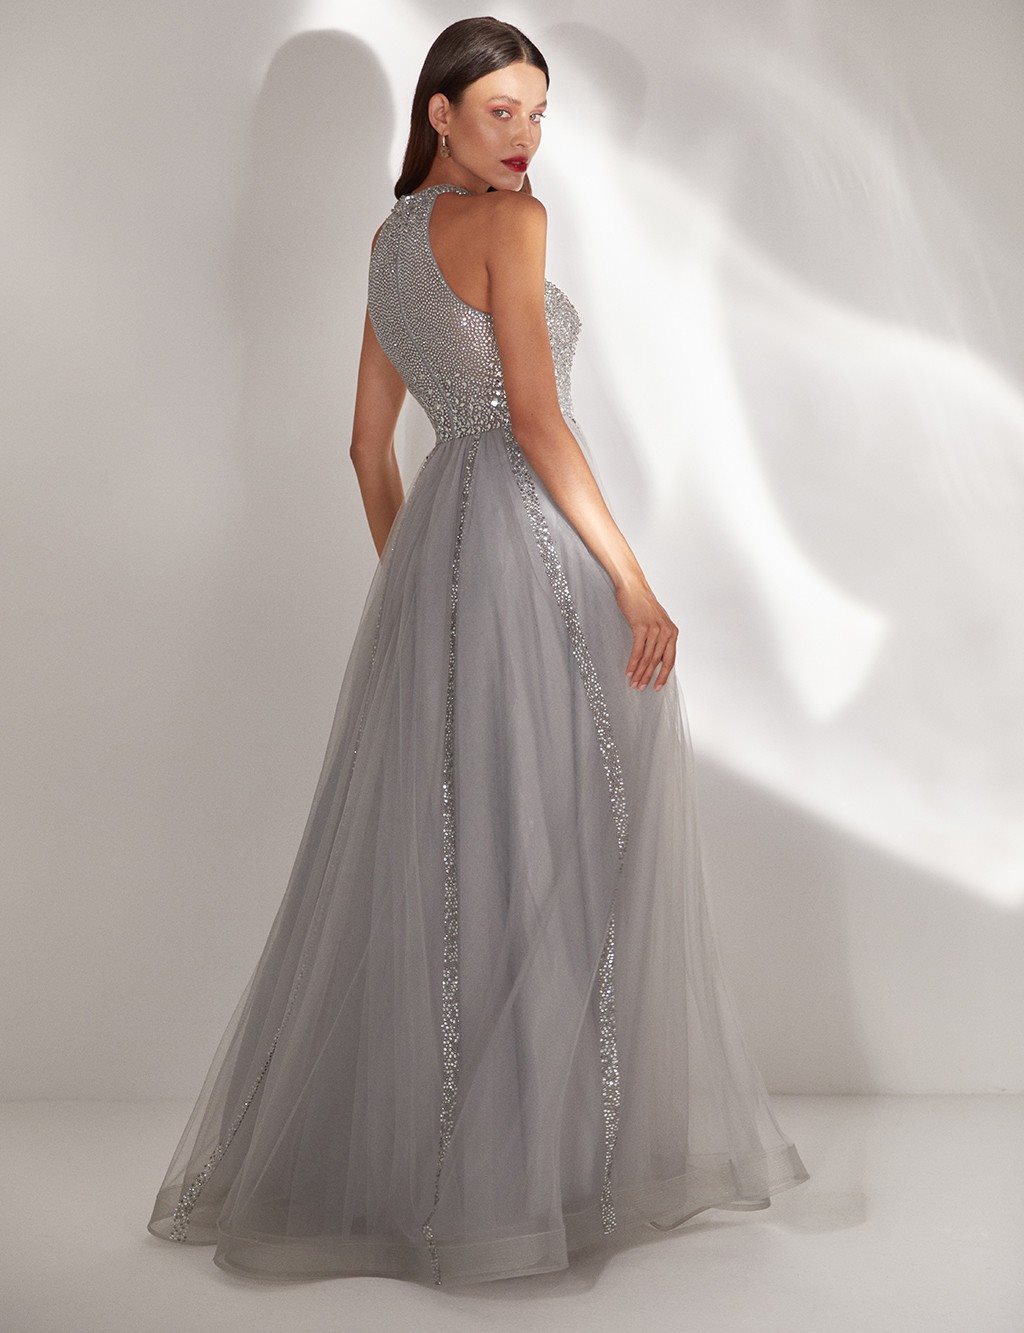 TIARA Tulle Skirt Stone Decorated Evening Dress B20 26166 Grey